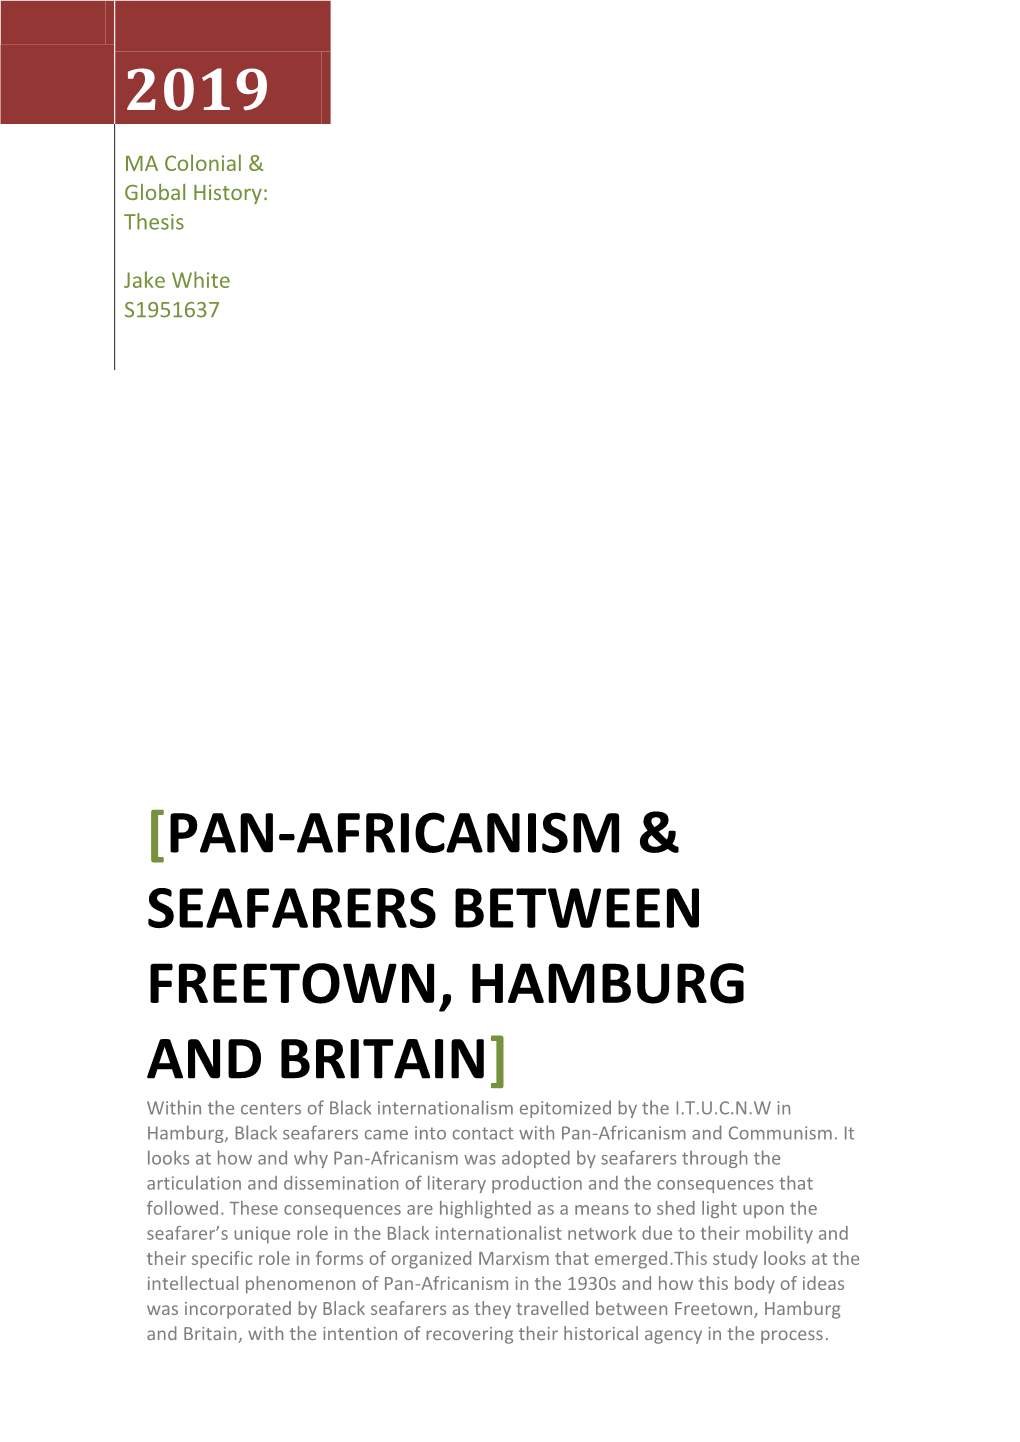 Pan-Africanism & Seafarers Between Freetown, Hamburg and Britain